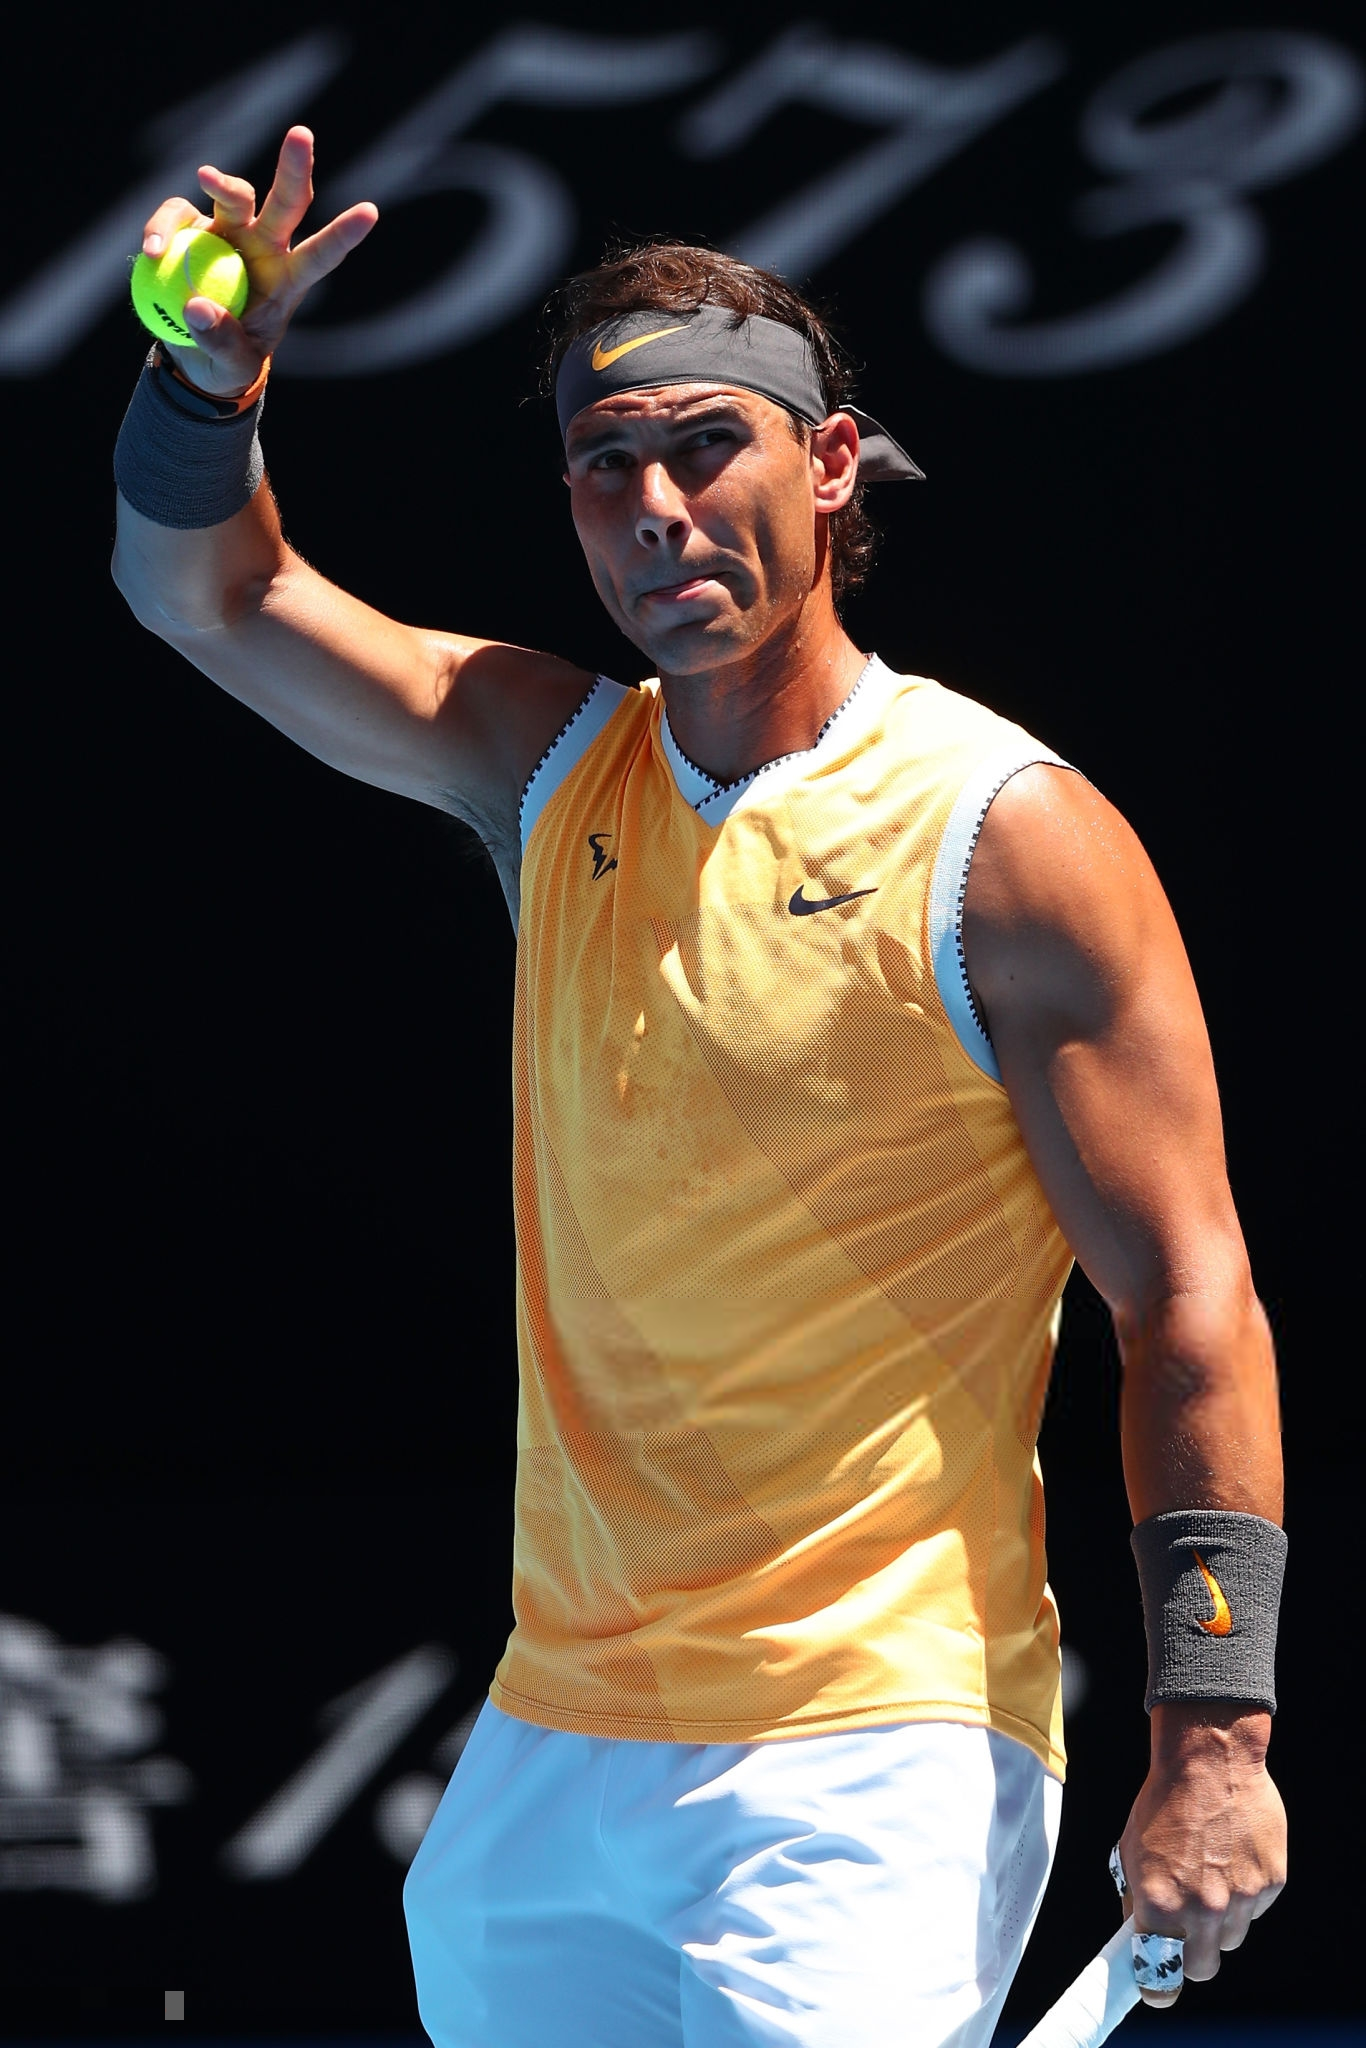 rafael nadal first round match at australian open photo (2) – Rafael Nadal